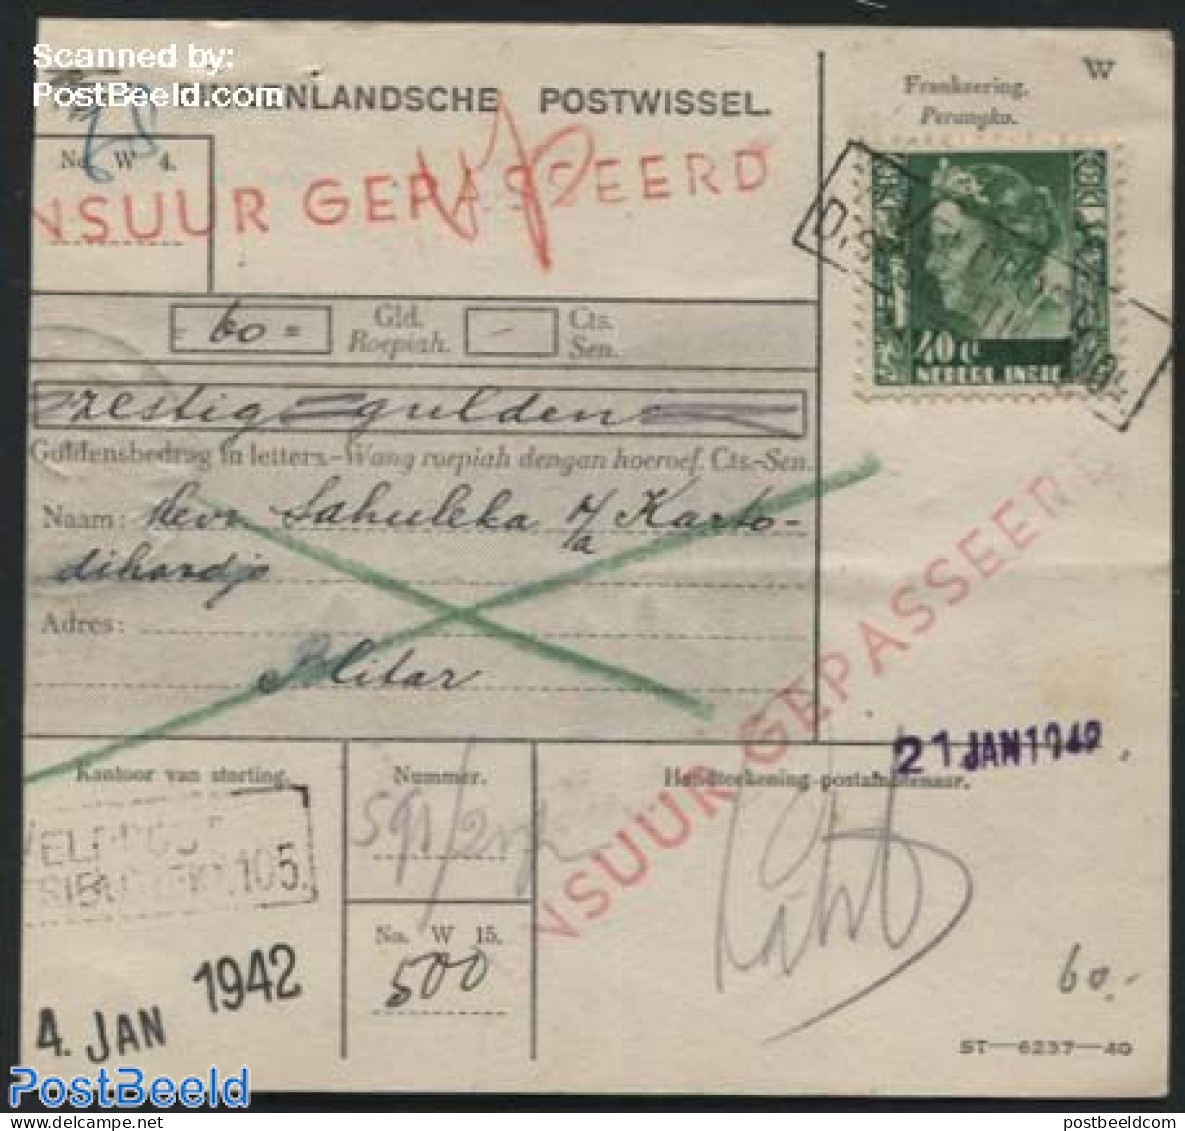 Netherlands Indies 1942 Money Order, Fieldpost, Postal History, History - World War II - Guerre Mondiale (Seconde)